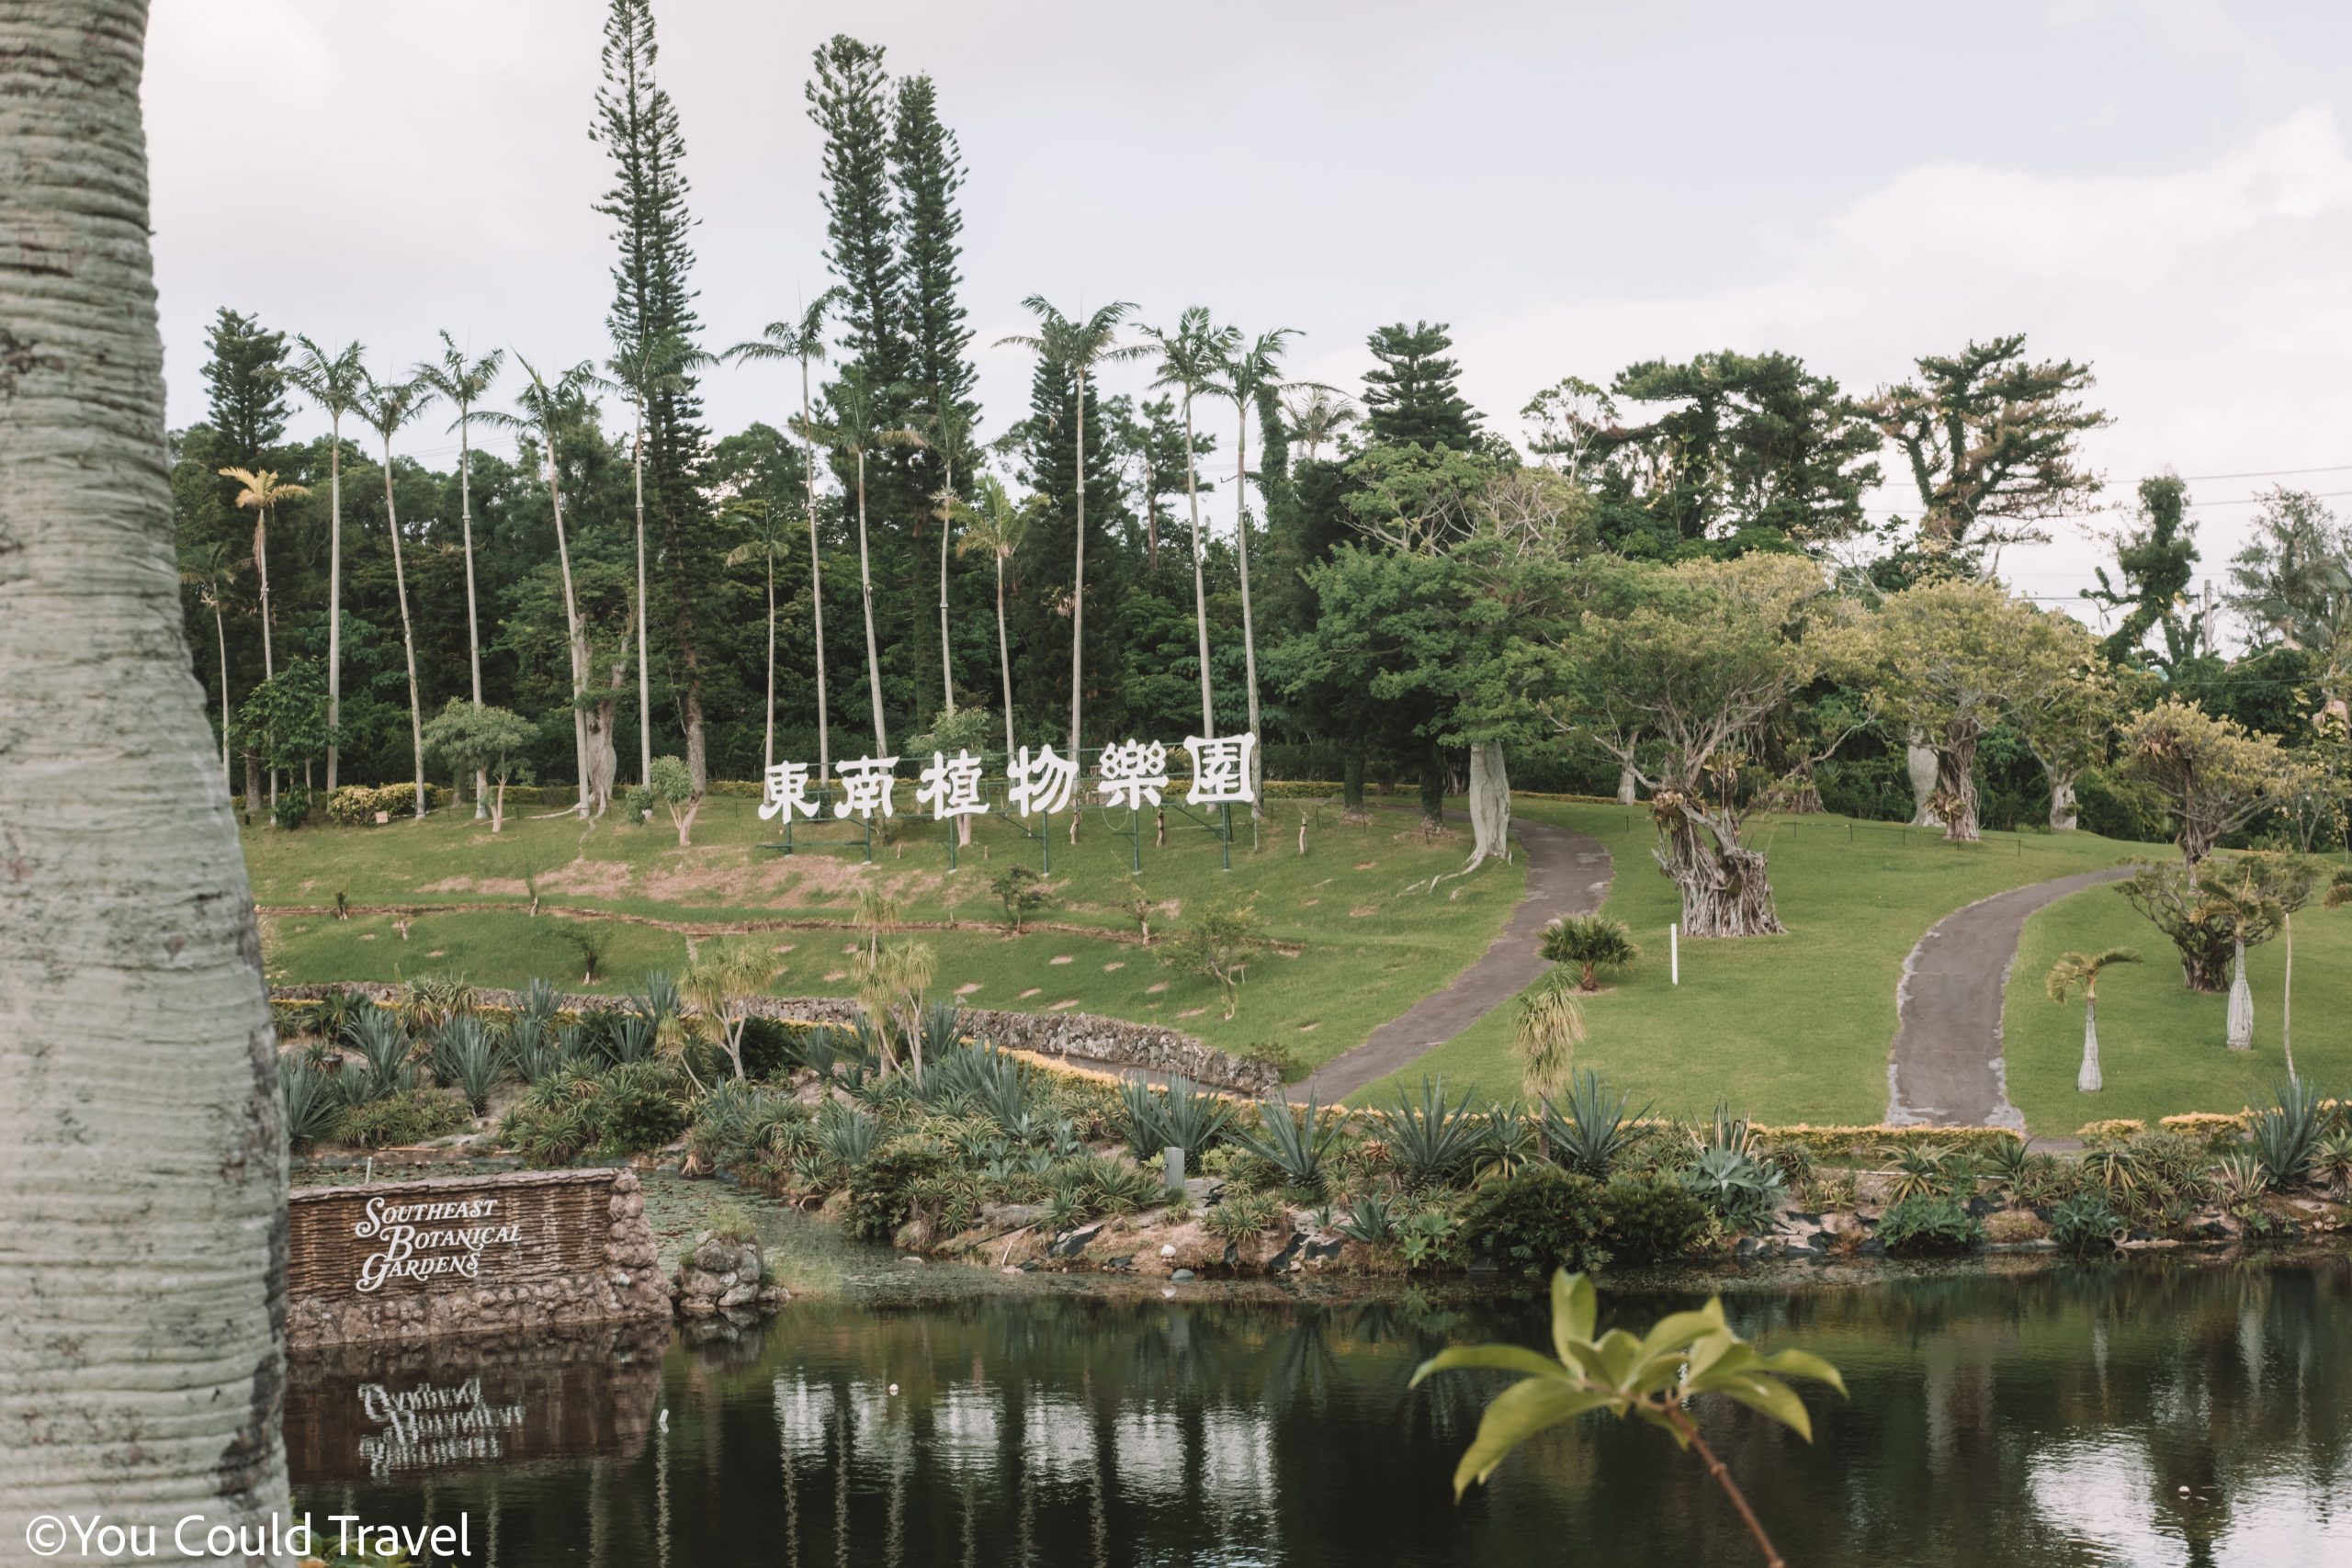 The water garden Okinawa Southeast botanical gardens